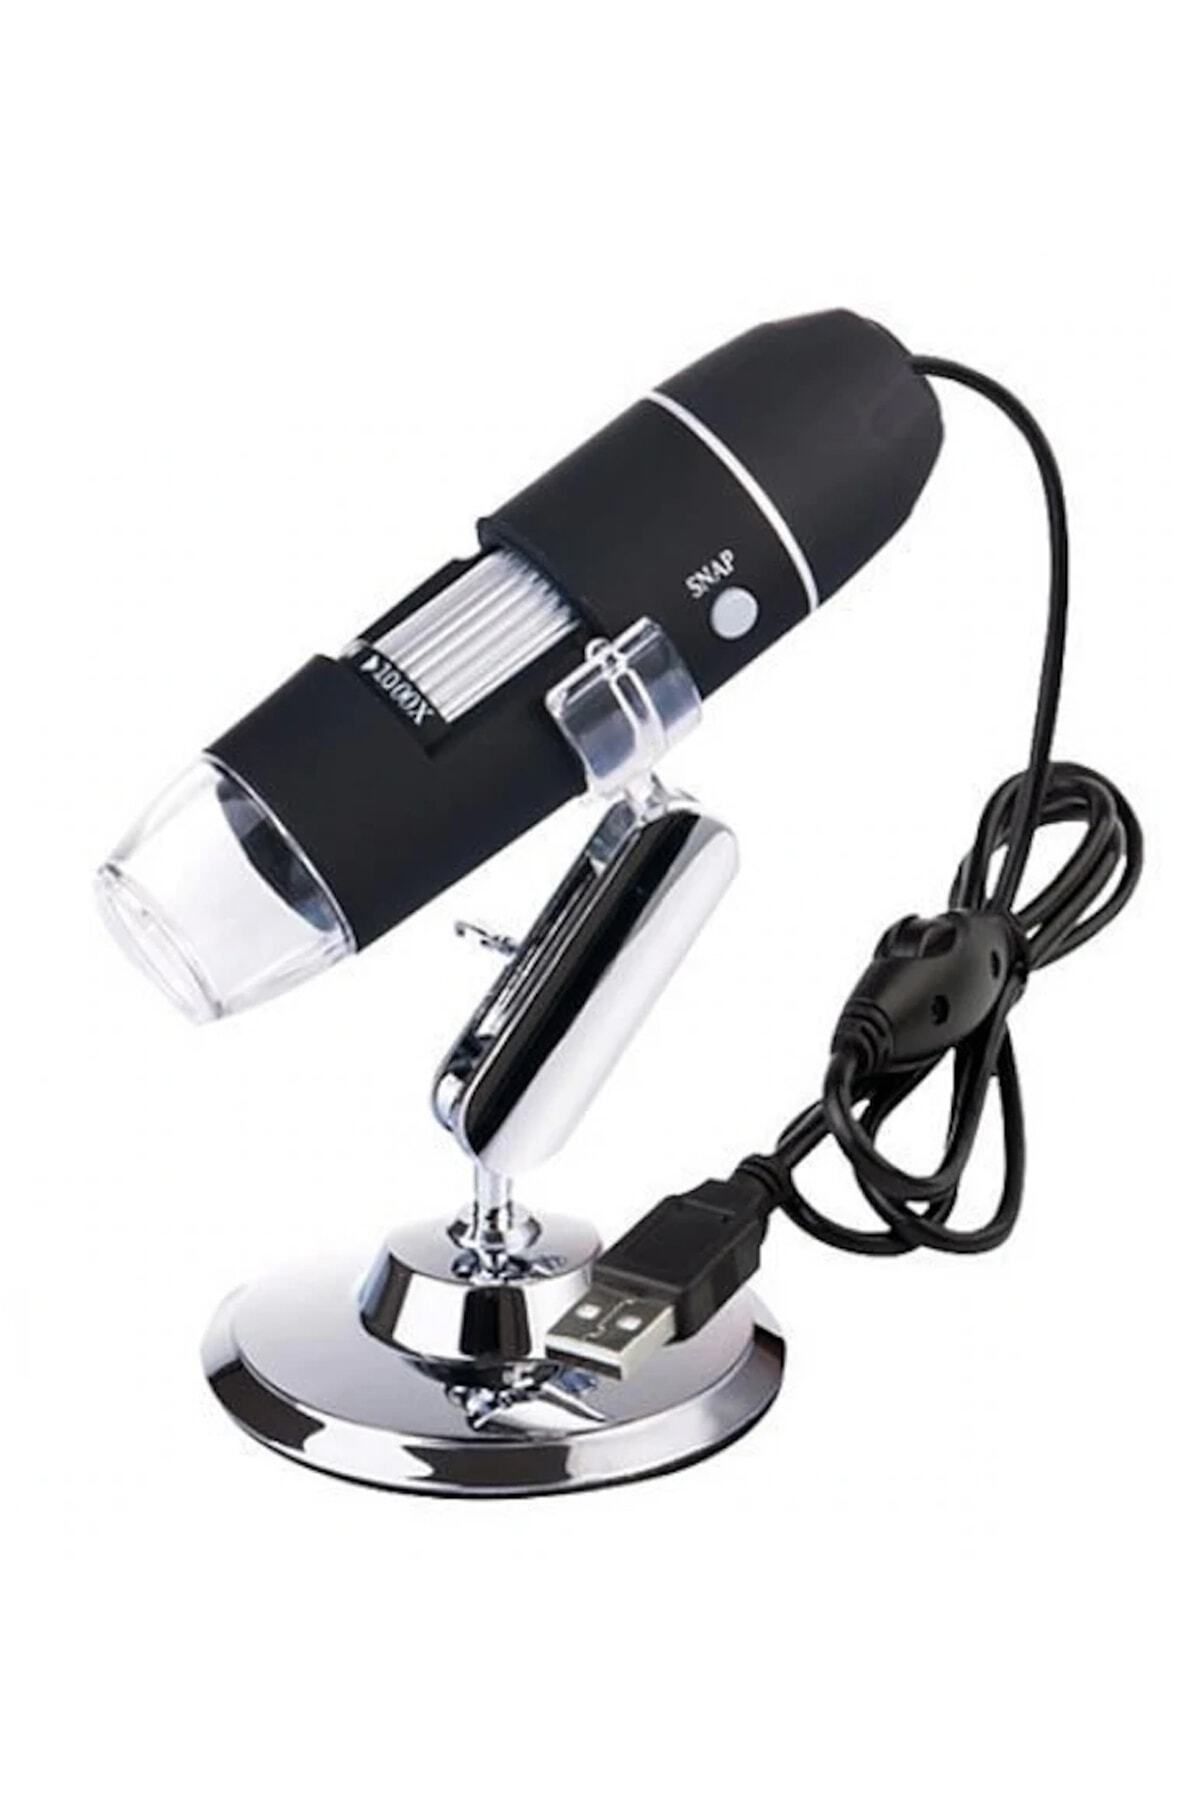 Microcase 1600x Dijital Mikroskop Usb Hd Cmos 8 Led Digital Microscobe